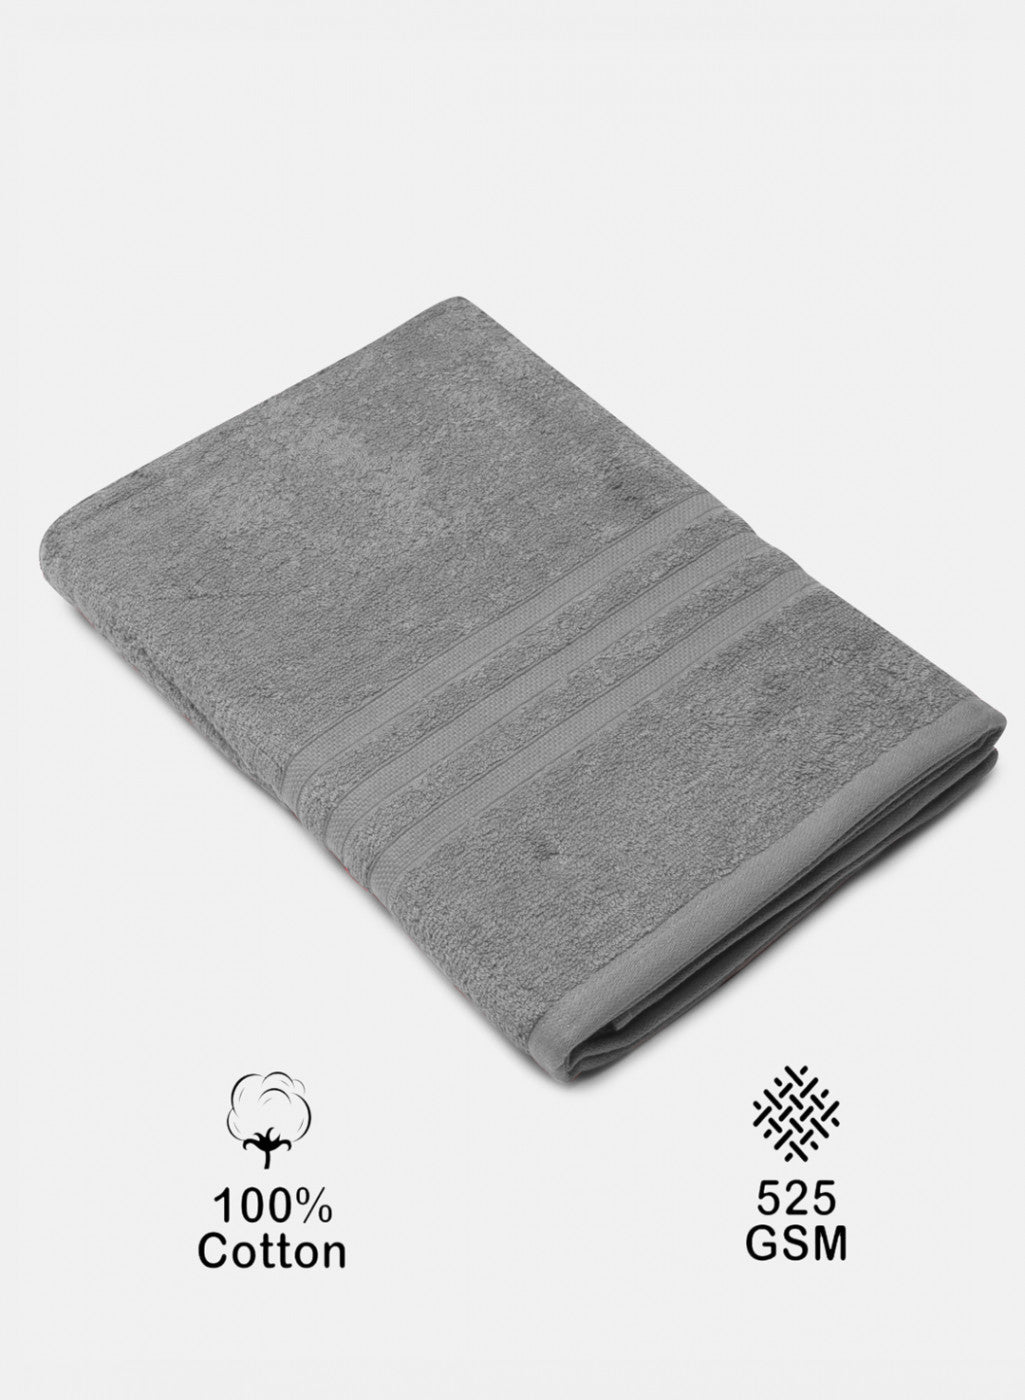 Grey Cotton 525 GSM Bath Towel